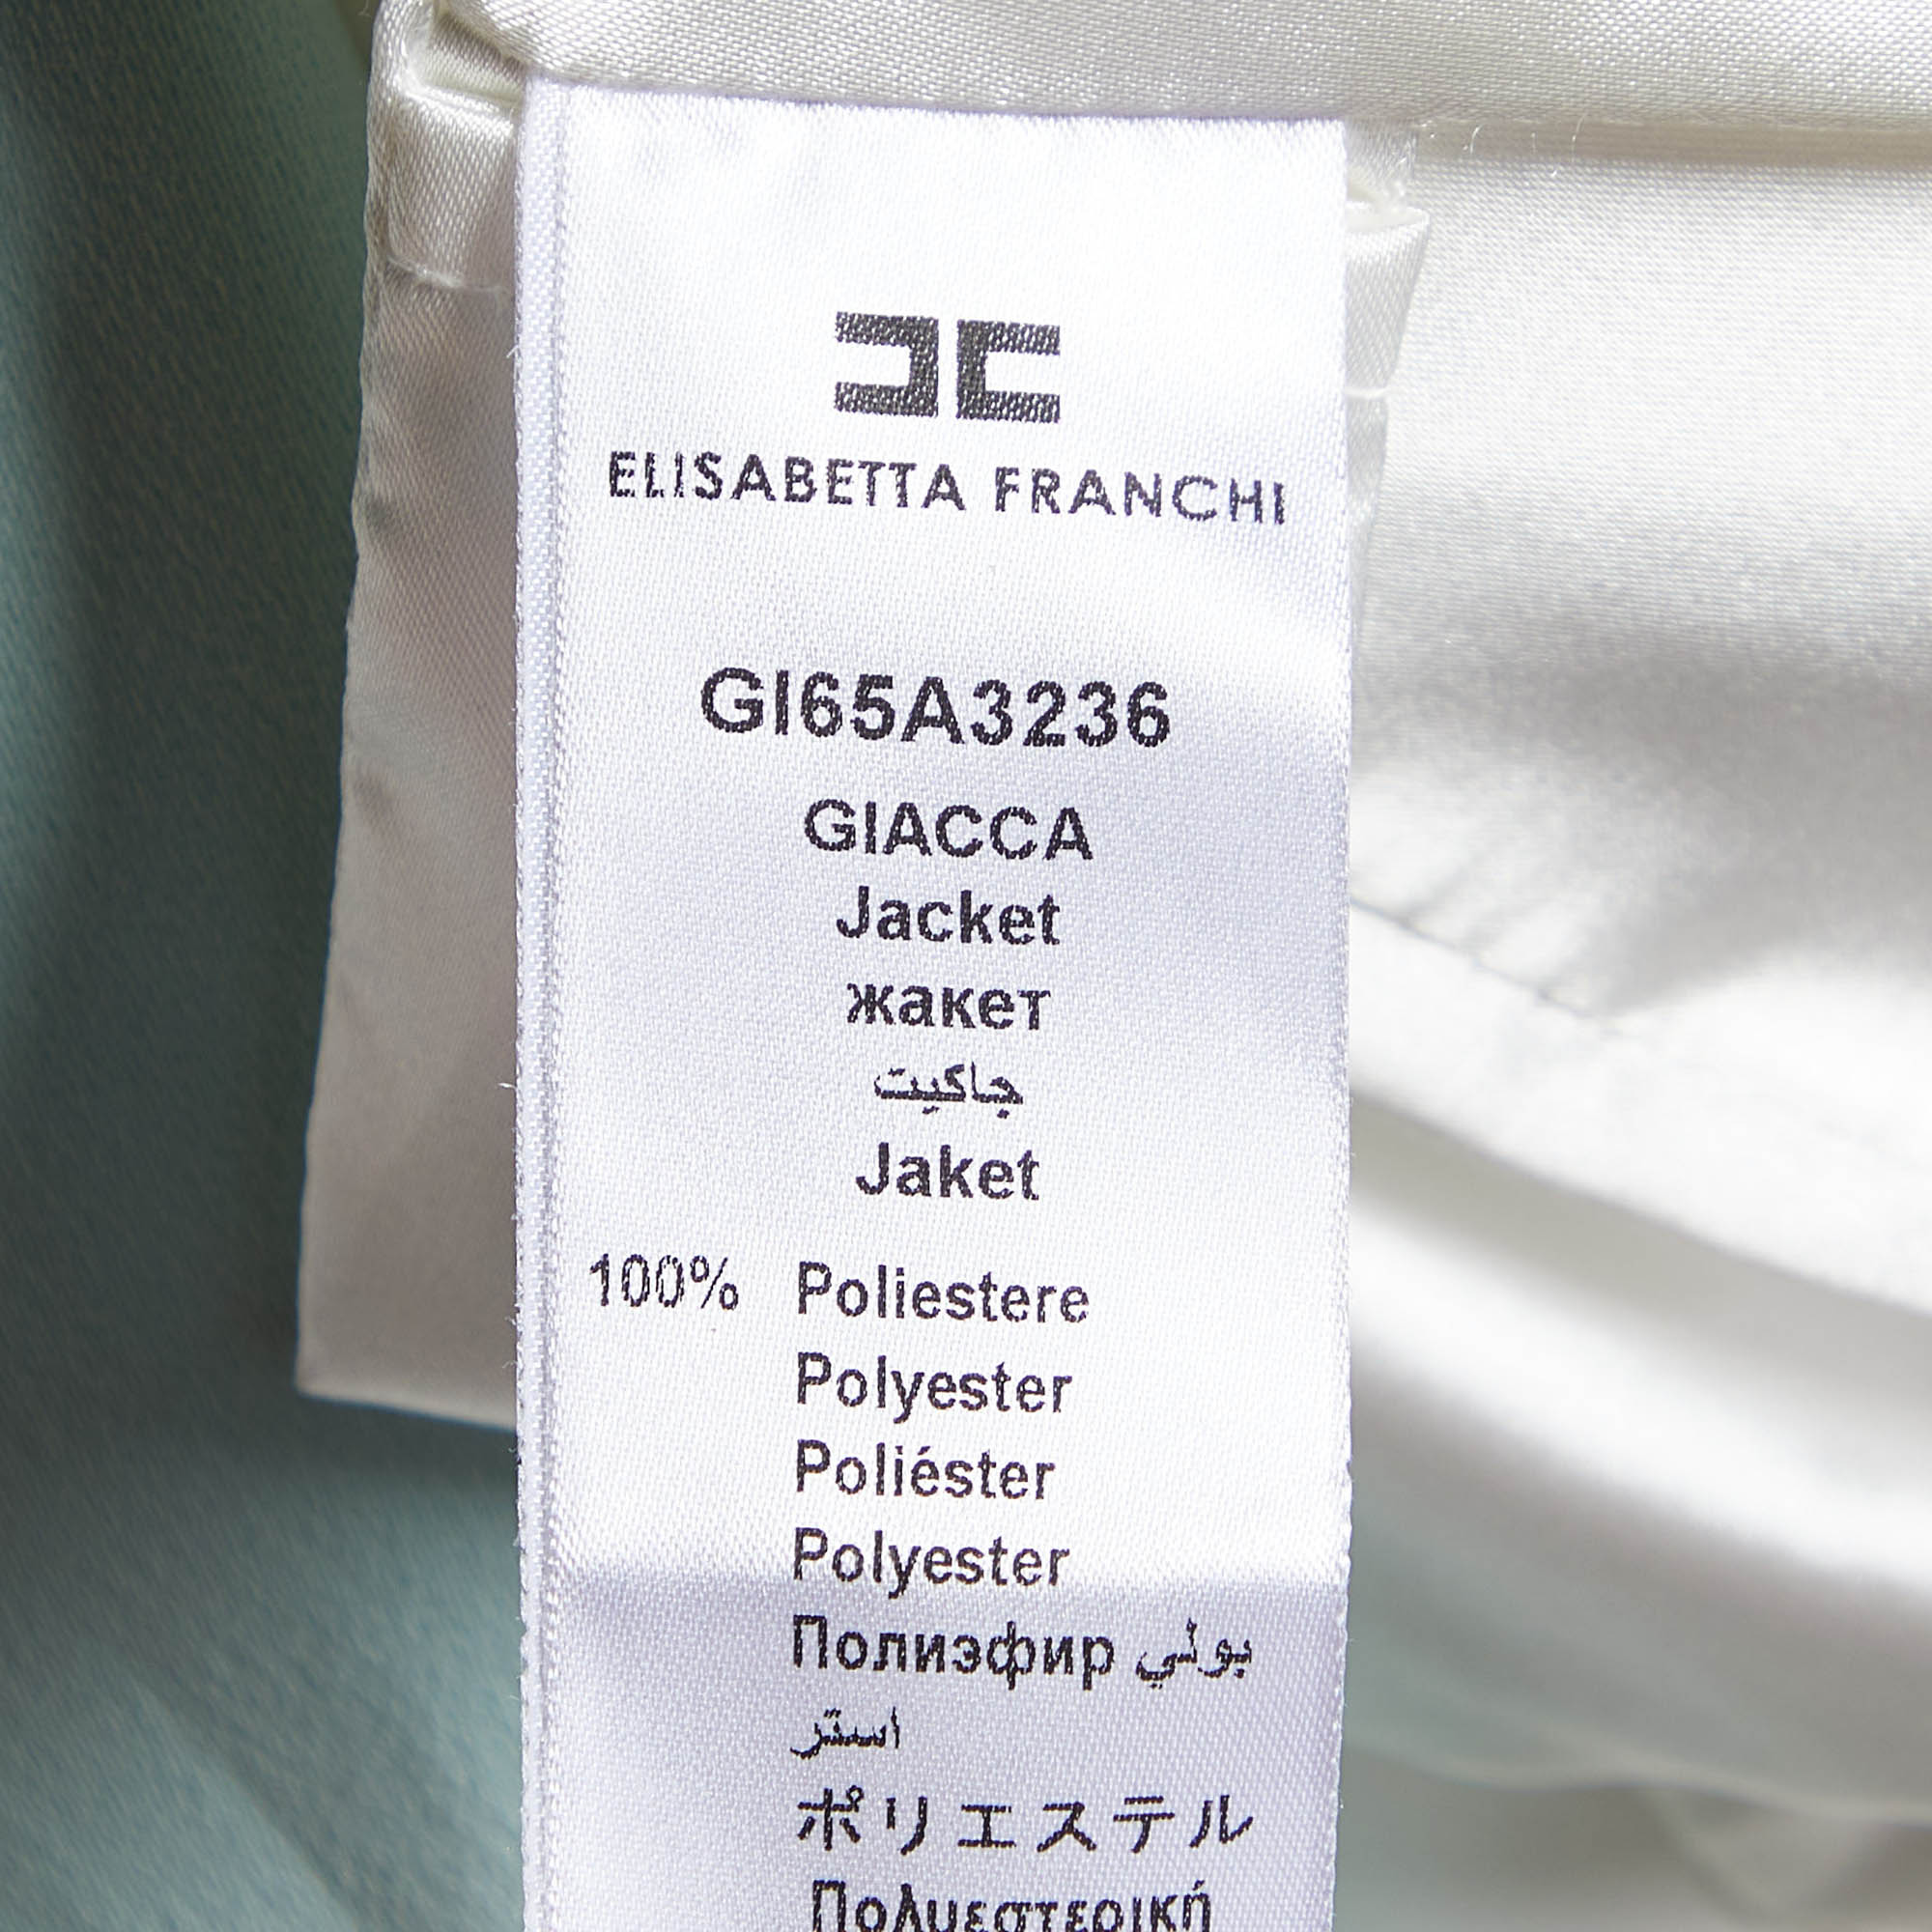 Elisabetta Franchi White Crepe Colorblock Pleated Jacket M